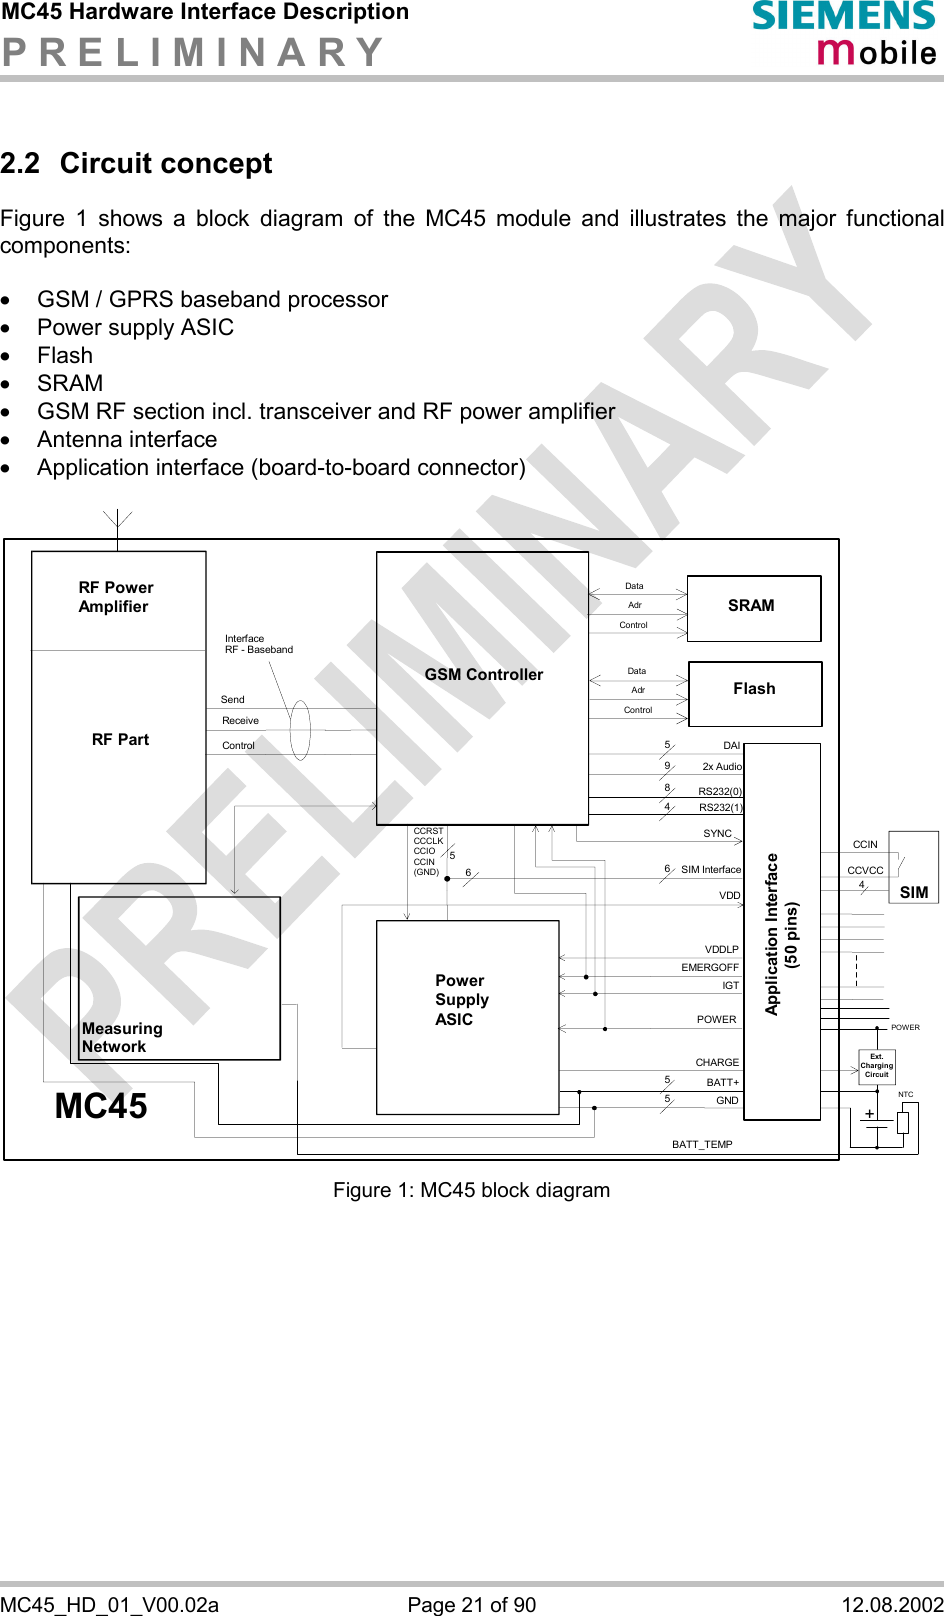 MC45 Hardware Interface Description P R E L I M I N A R Y      MC45_HD_01_V00.02a  Page 21 of 90  12.08.2002 2.2 Circuit concept Figure 1 shows a block diagram of the MC45 module and illustrates the major functional components:  ·  GSM / GPRS baseband processor ·  Power supply ASIC ·  Flash ·  SRAM ·  GSM RF section incl. transceiver and RF power amplifier ·  Antenna interface ·  Application interface (board-to-board connector)  GSM ControllerPowerSupplyASICSIMBATT+GNDIGTEMERGOFFRS232(1)RS232(0)52x AudioSIM InterfaceCCRSTCCCLKCCIOCCIN(GND)DataAdrControlReceiveSendControlMC45InterfaceRF - Baseband55MeasuringNetwork4CCINCCVCCPOWERBATT_TEMPVDDLPSYNCVDDRF PartRF PowerAmplifierDataAdrControlSRAMFlashCHARGE689DAI546POWER+Ext.ChargingCircuitNTCApplication Interface(50 pins) Figure 1: MC45 block diagram   